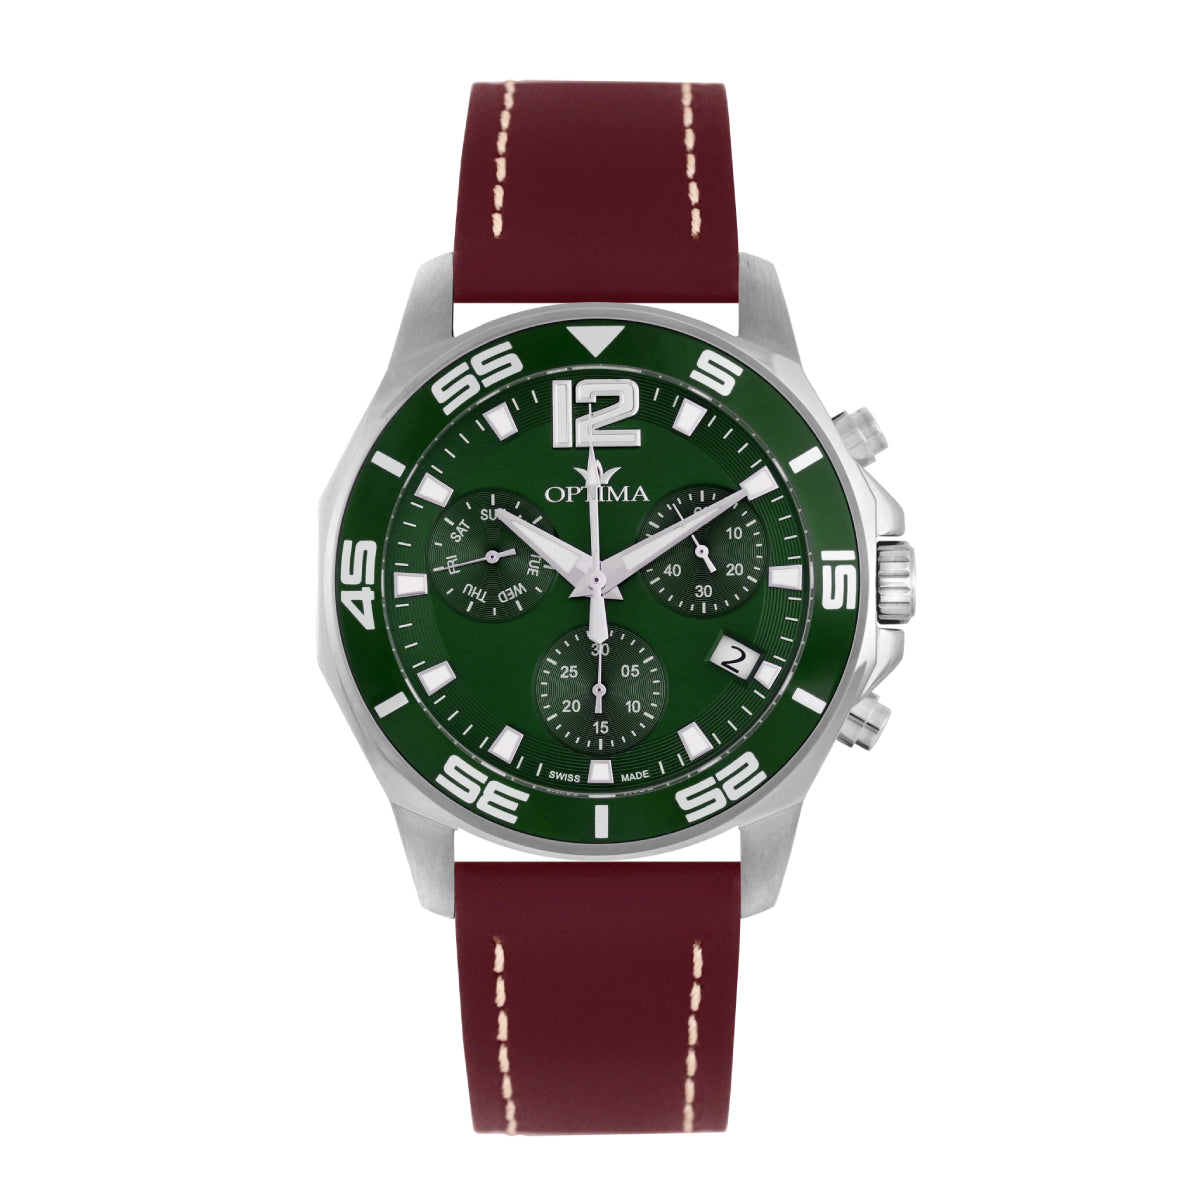 Optima Men's Swiss Quartz Watch with Green Dial - OPT-0007